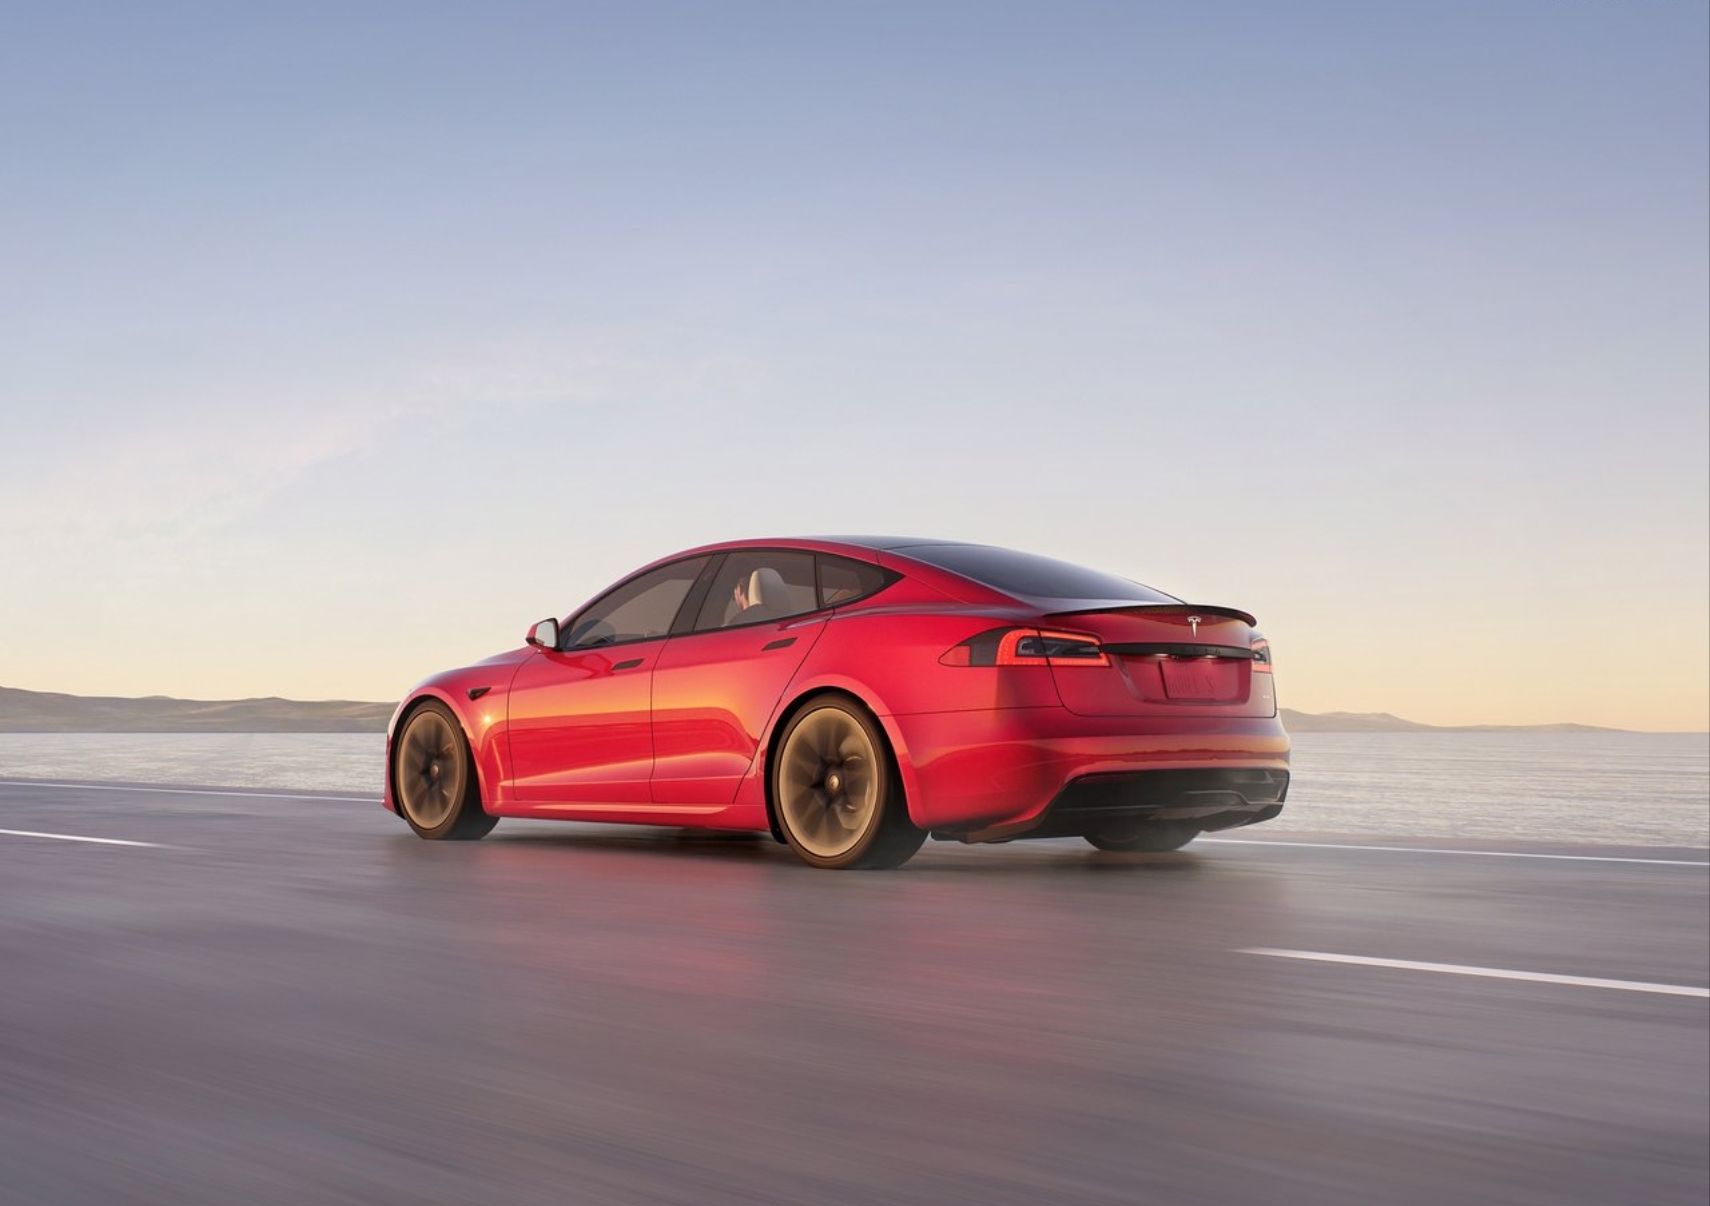 Red 2021 Tesla Model S driving